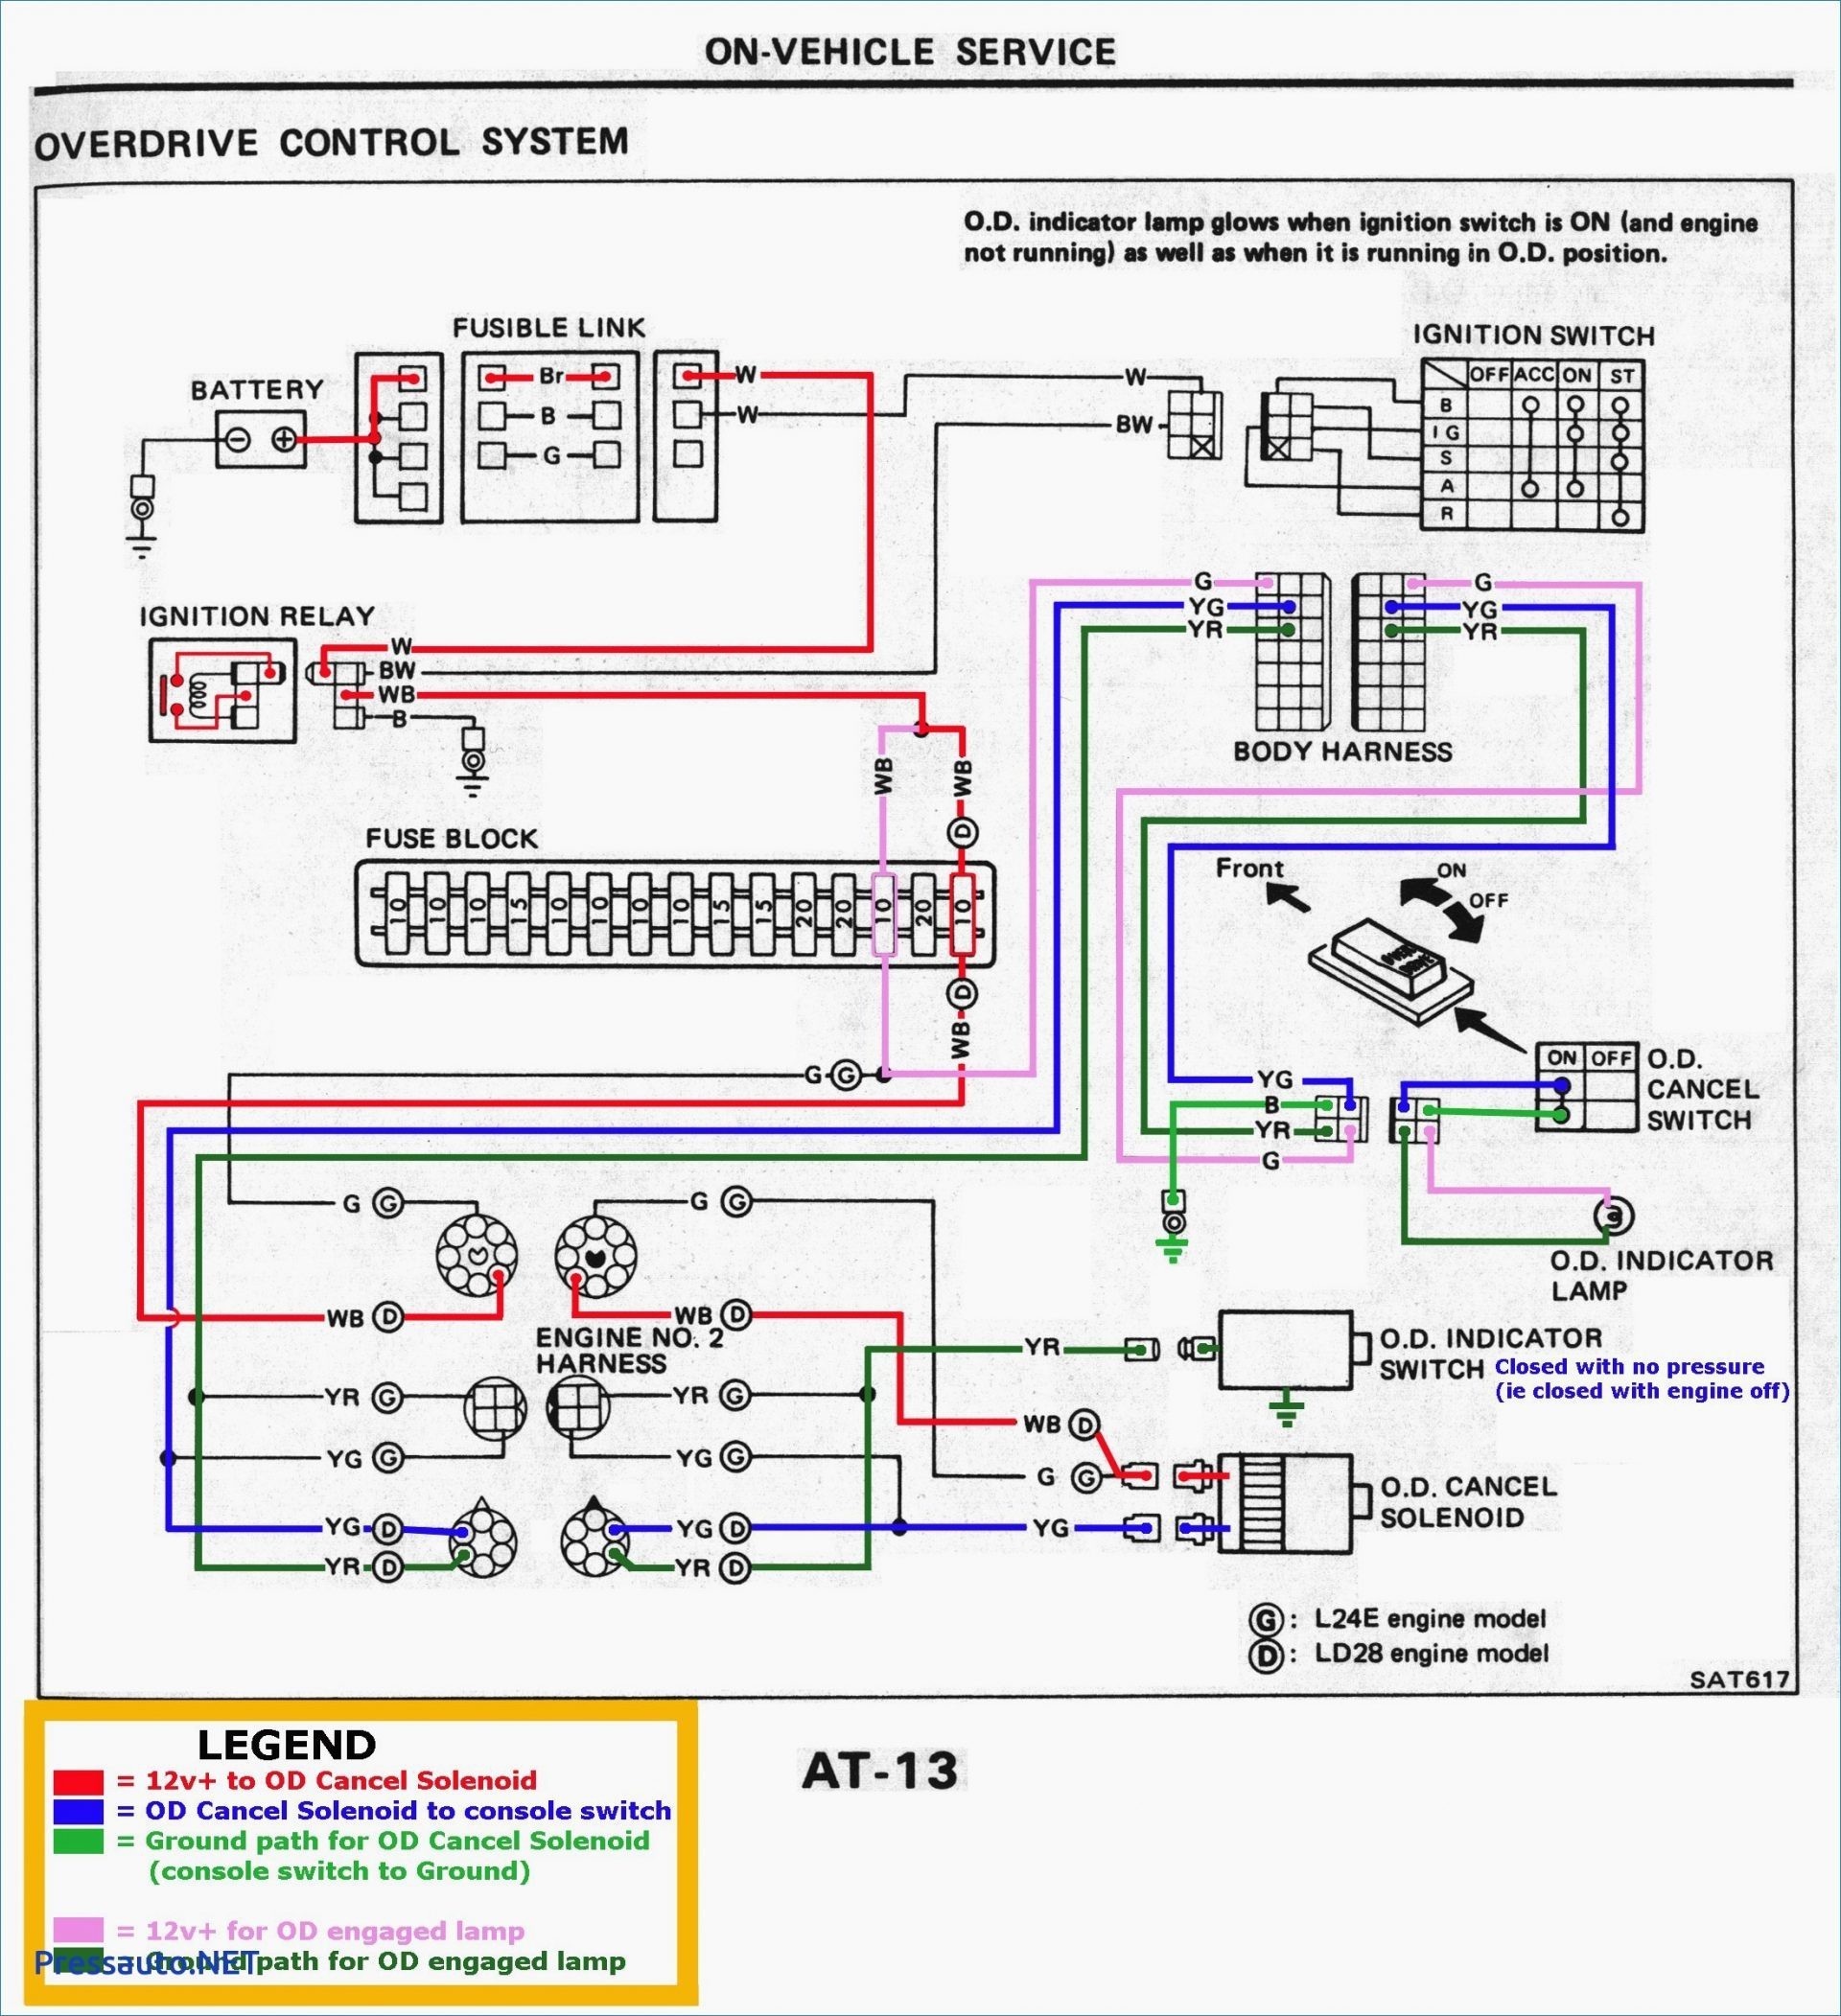 2005 Chevy Cavalier Engine Diagram 2002 Silverado Motor Diagram Wiring Diagram S for Help Your Of 2005 Chevy Cavalier Engine Diagram